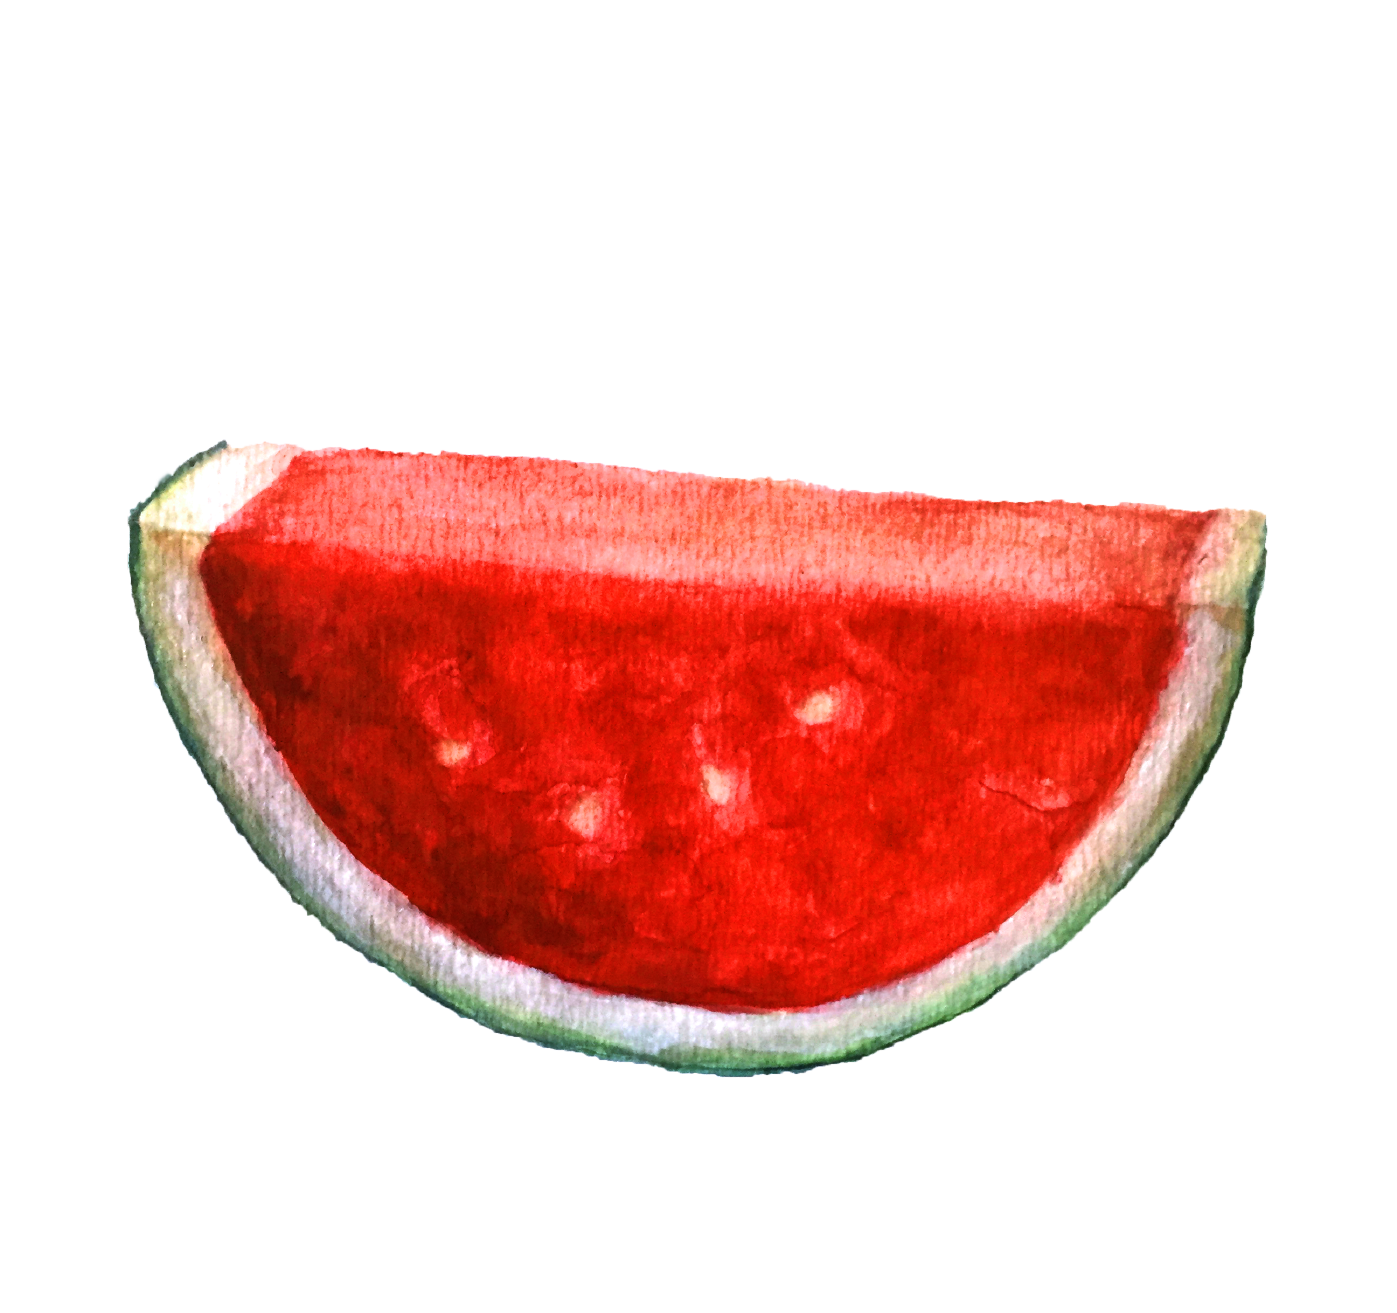 watermelon_watercolor